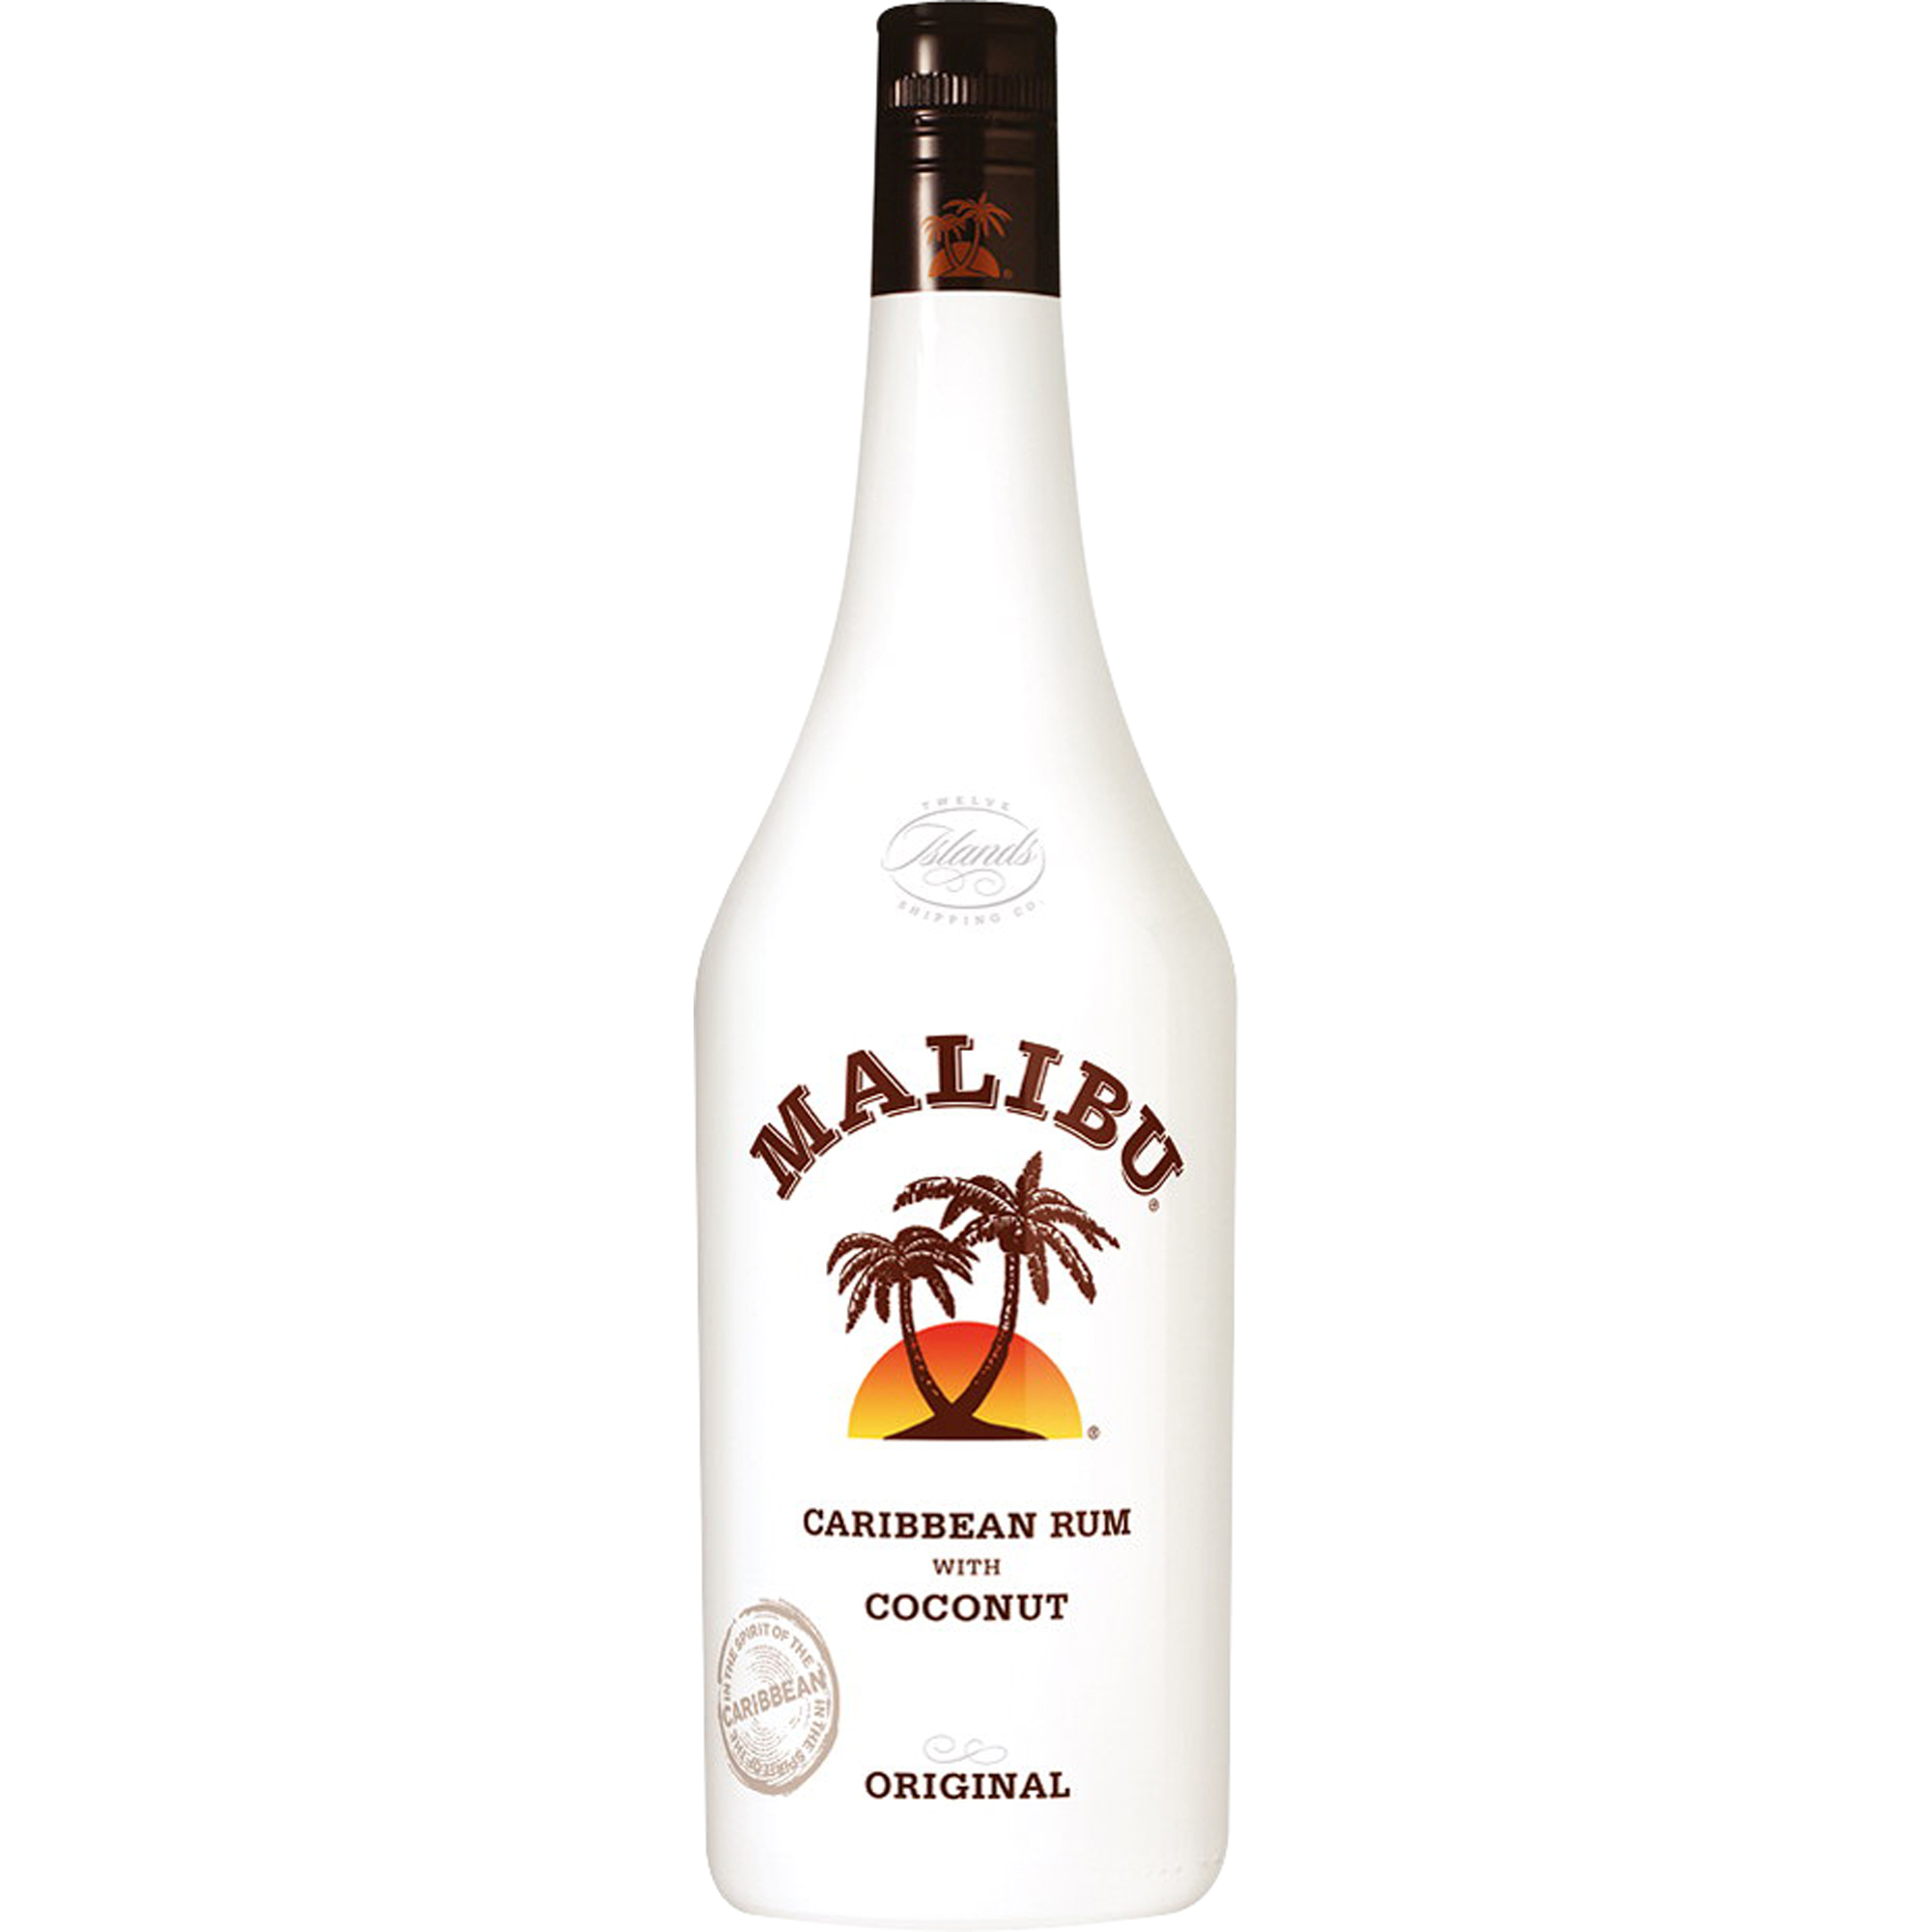 Send Malibu Caribbean Rum Online